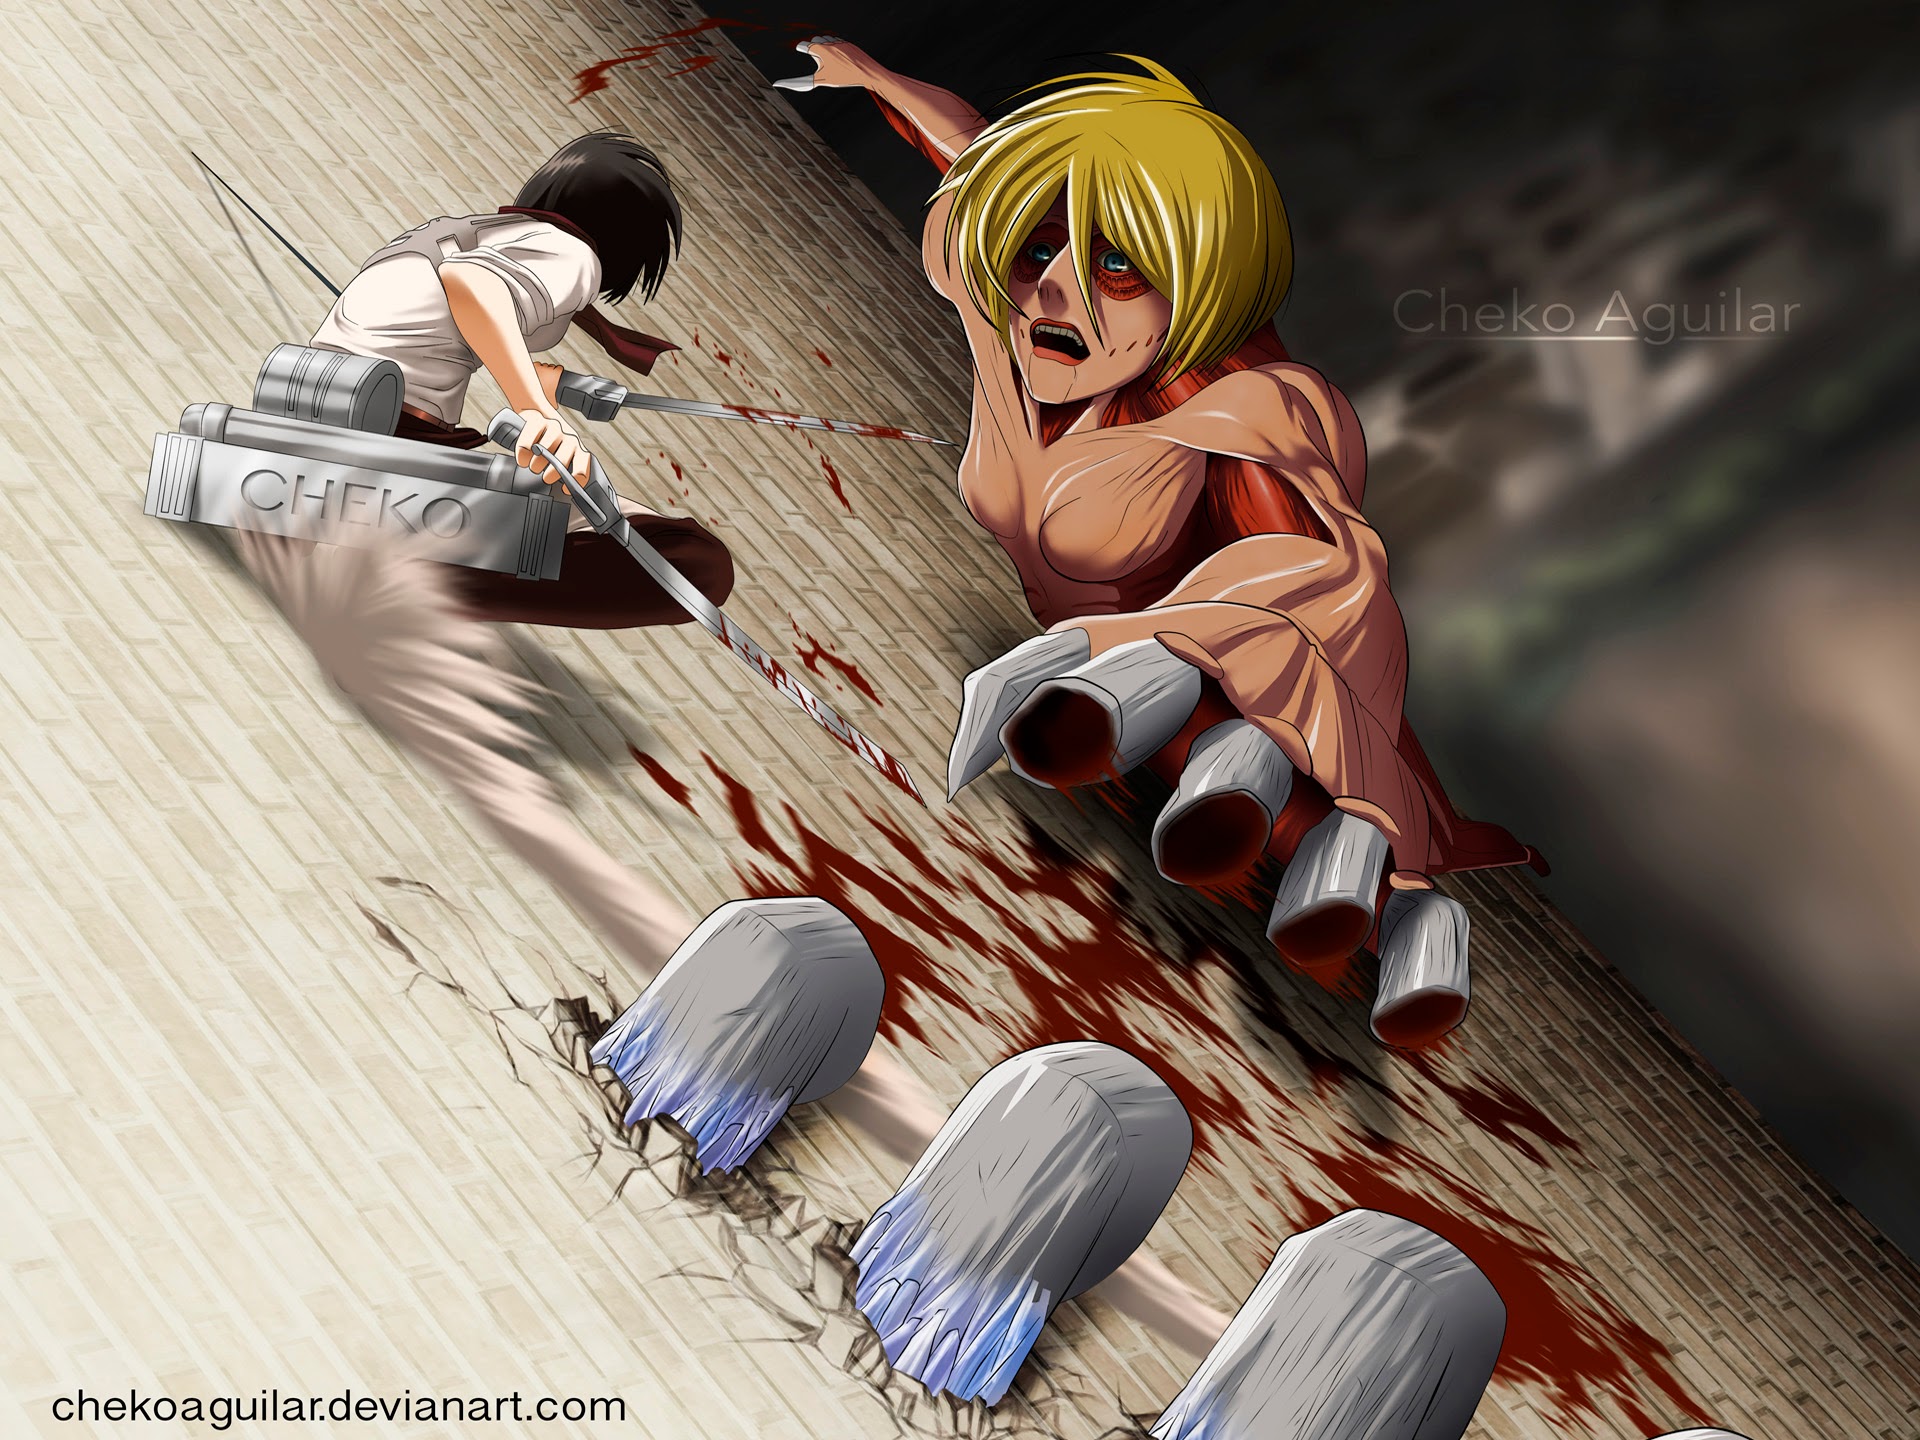 Anime Attack On Titan Art by Cheko Aguilar